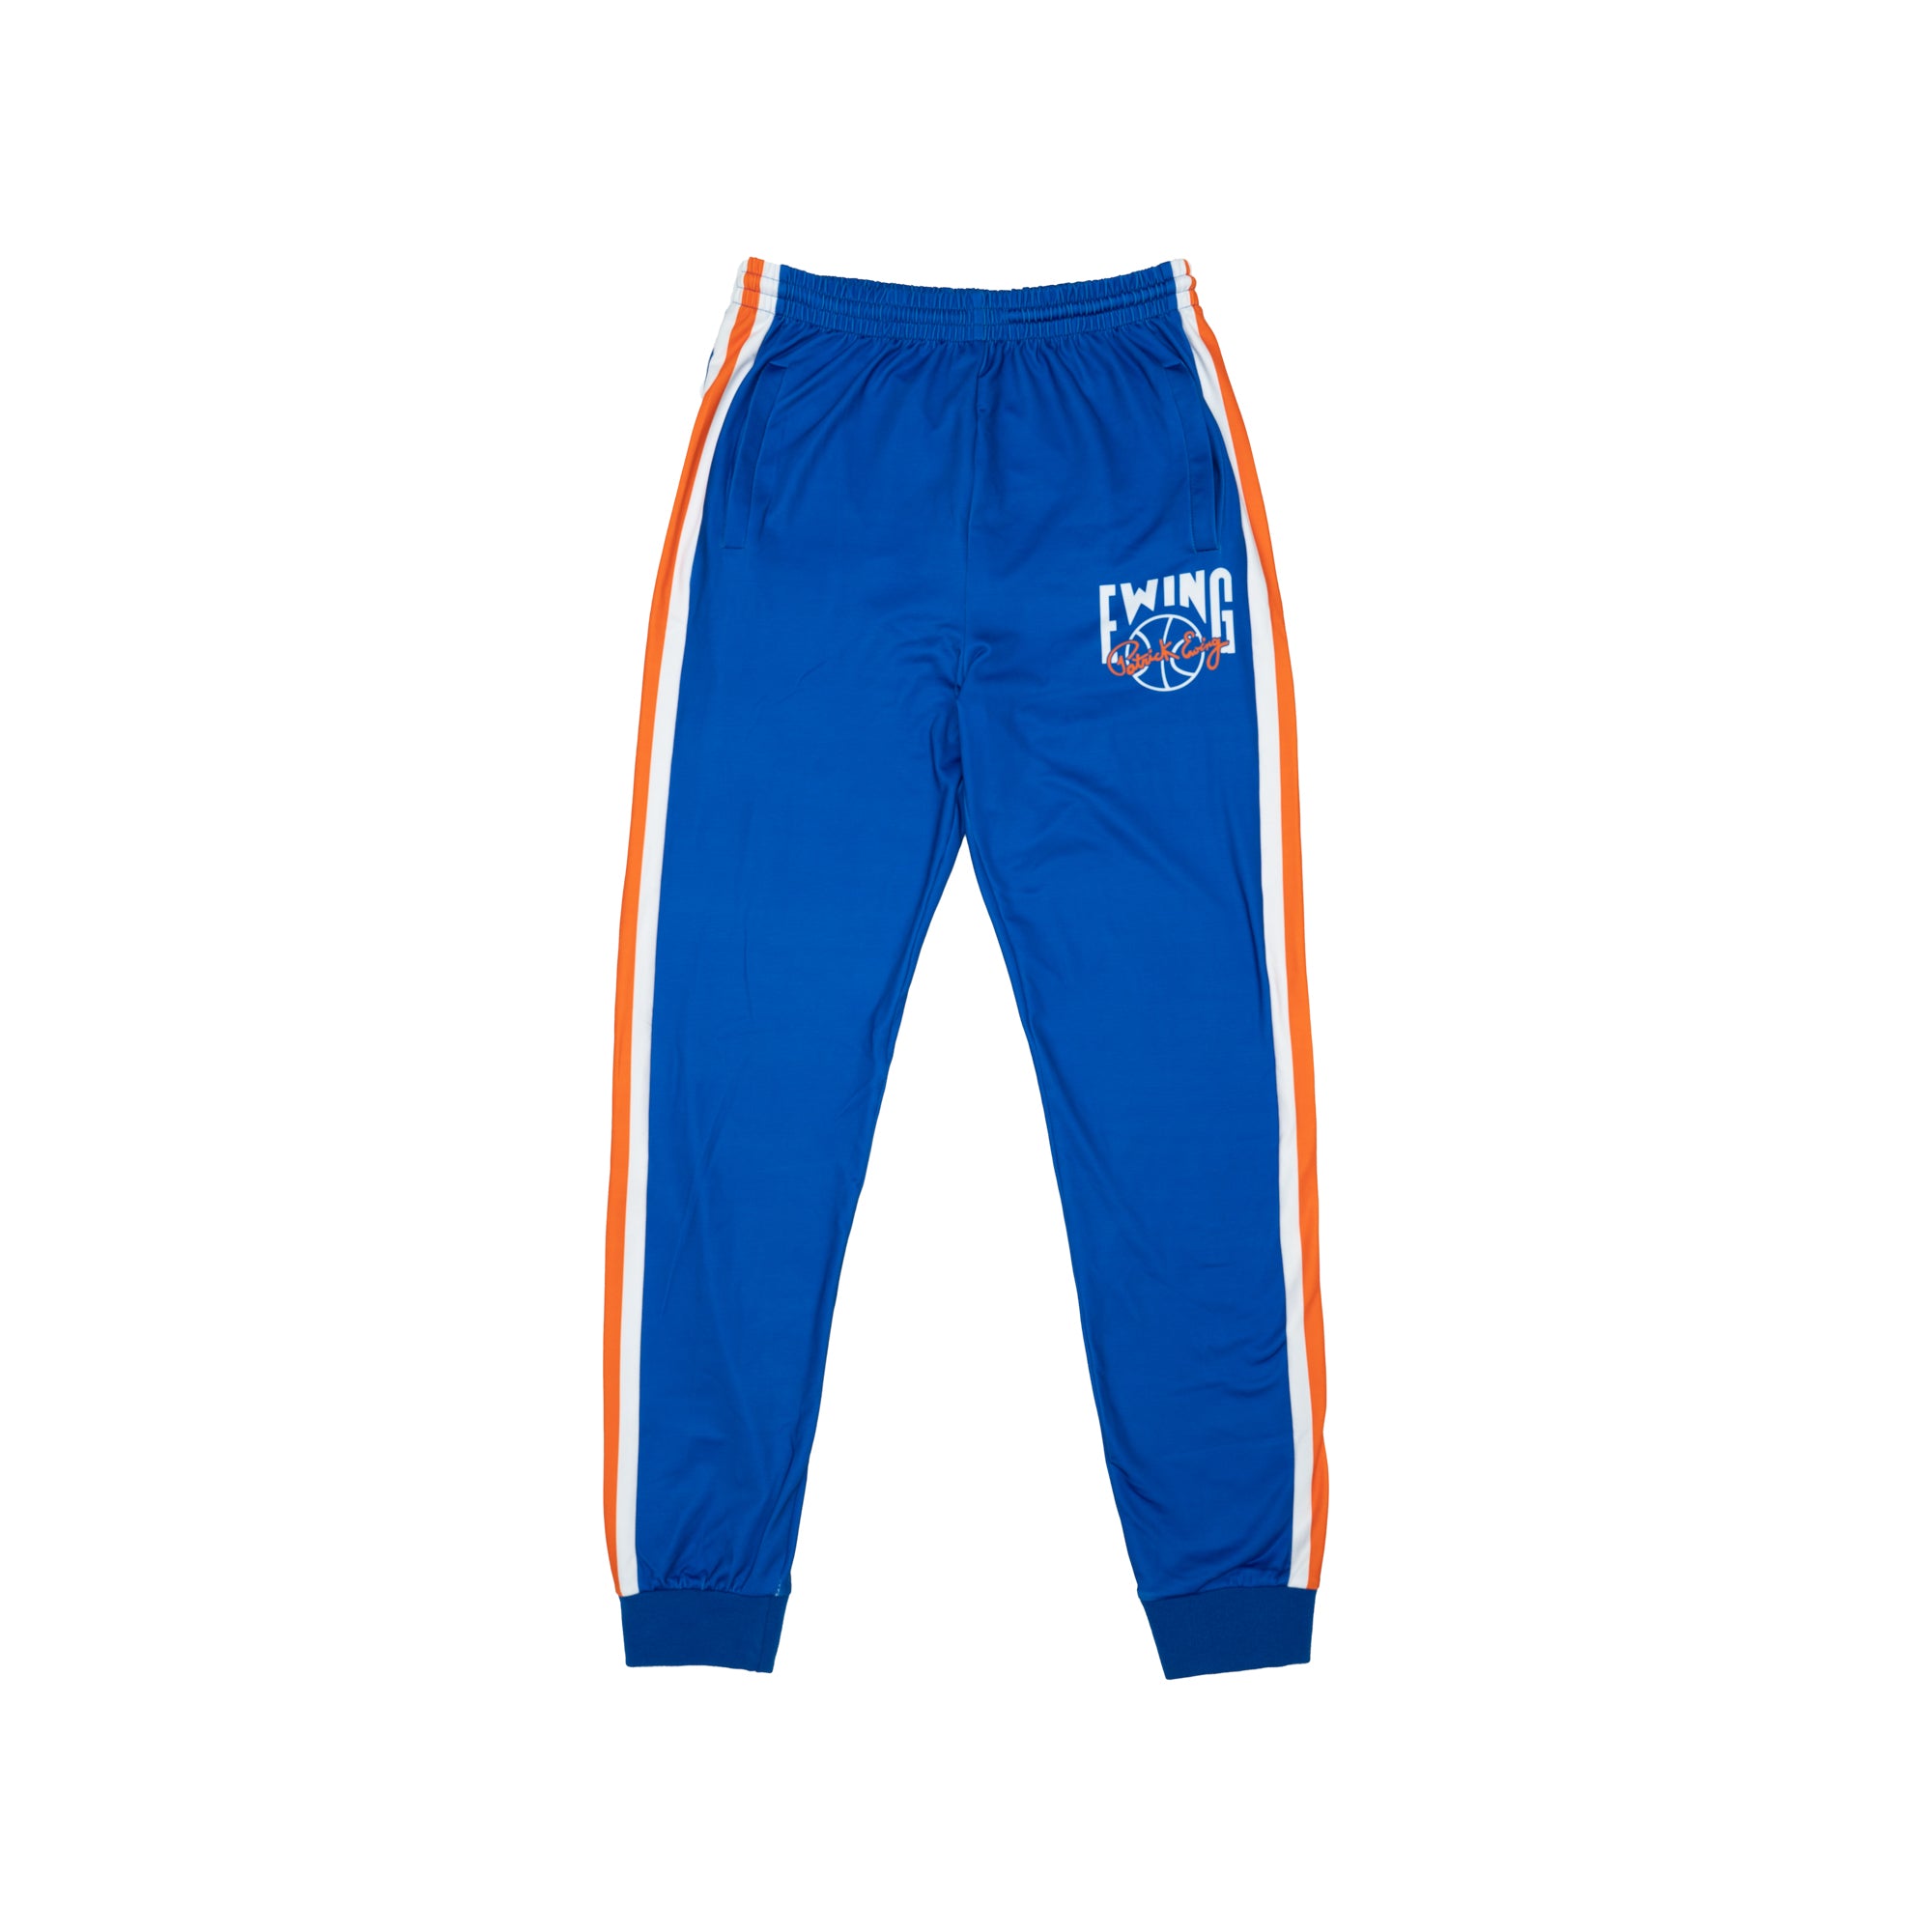 Ewing Blue Track Pants